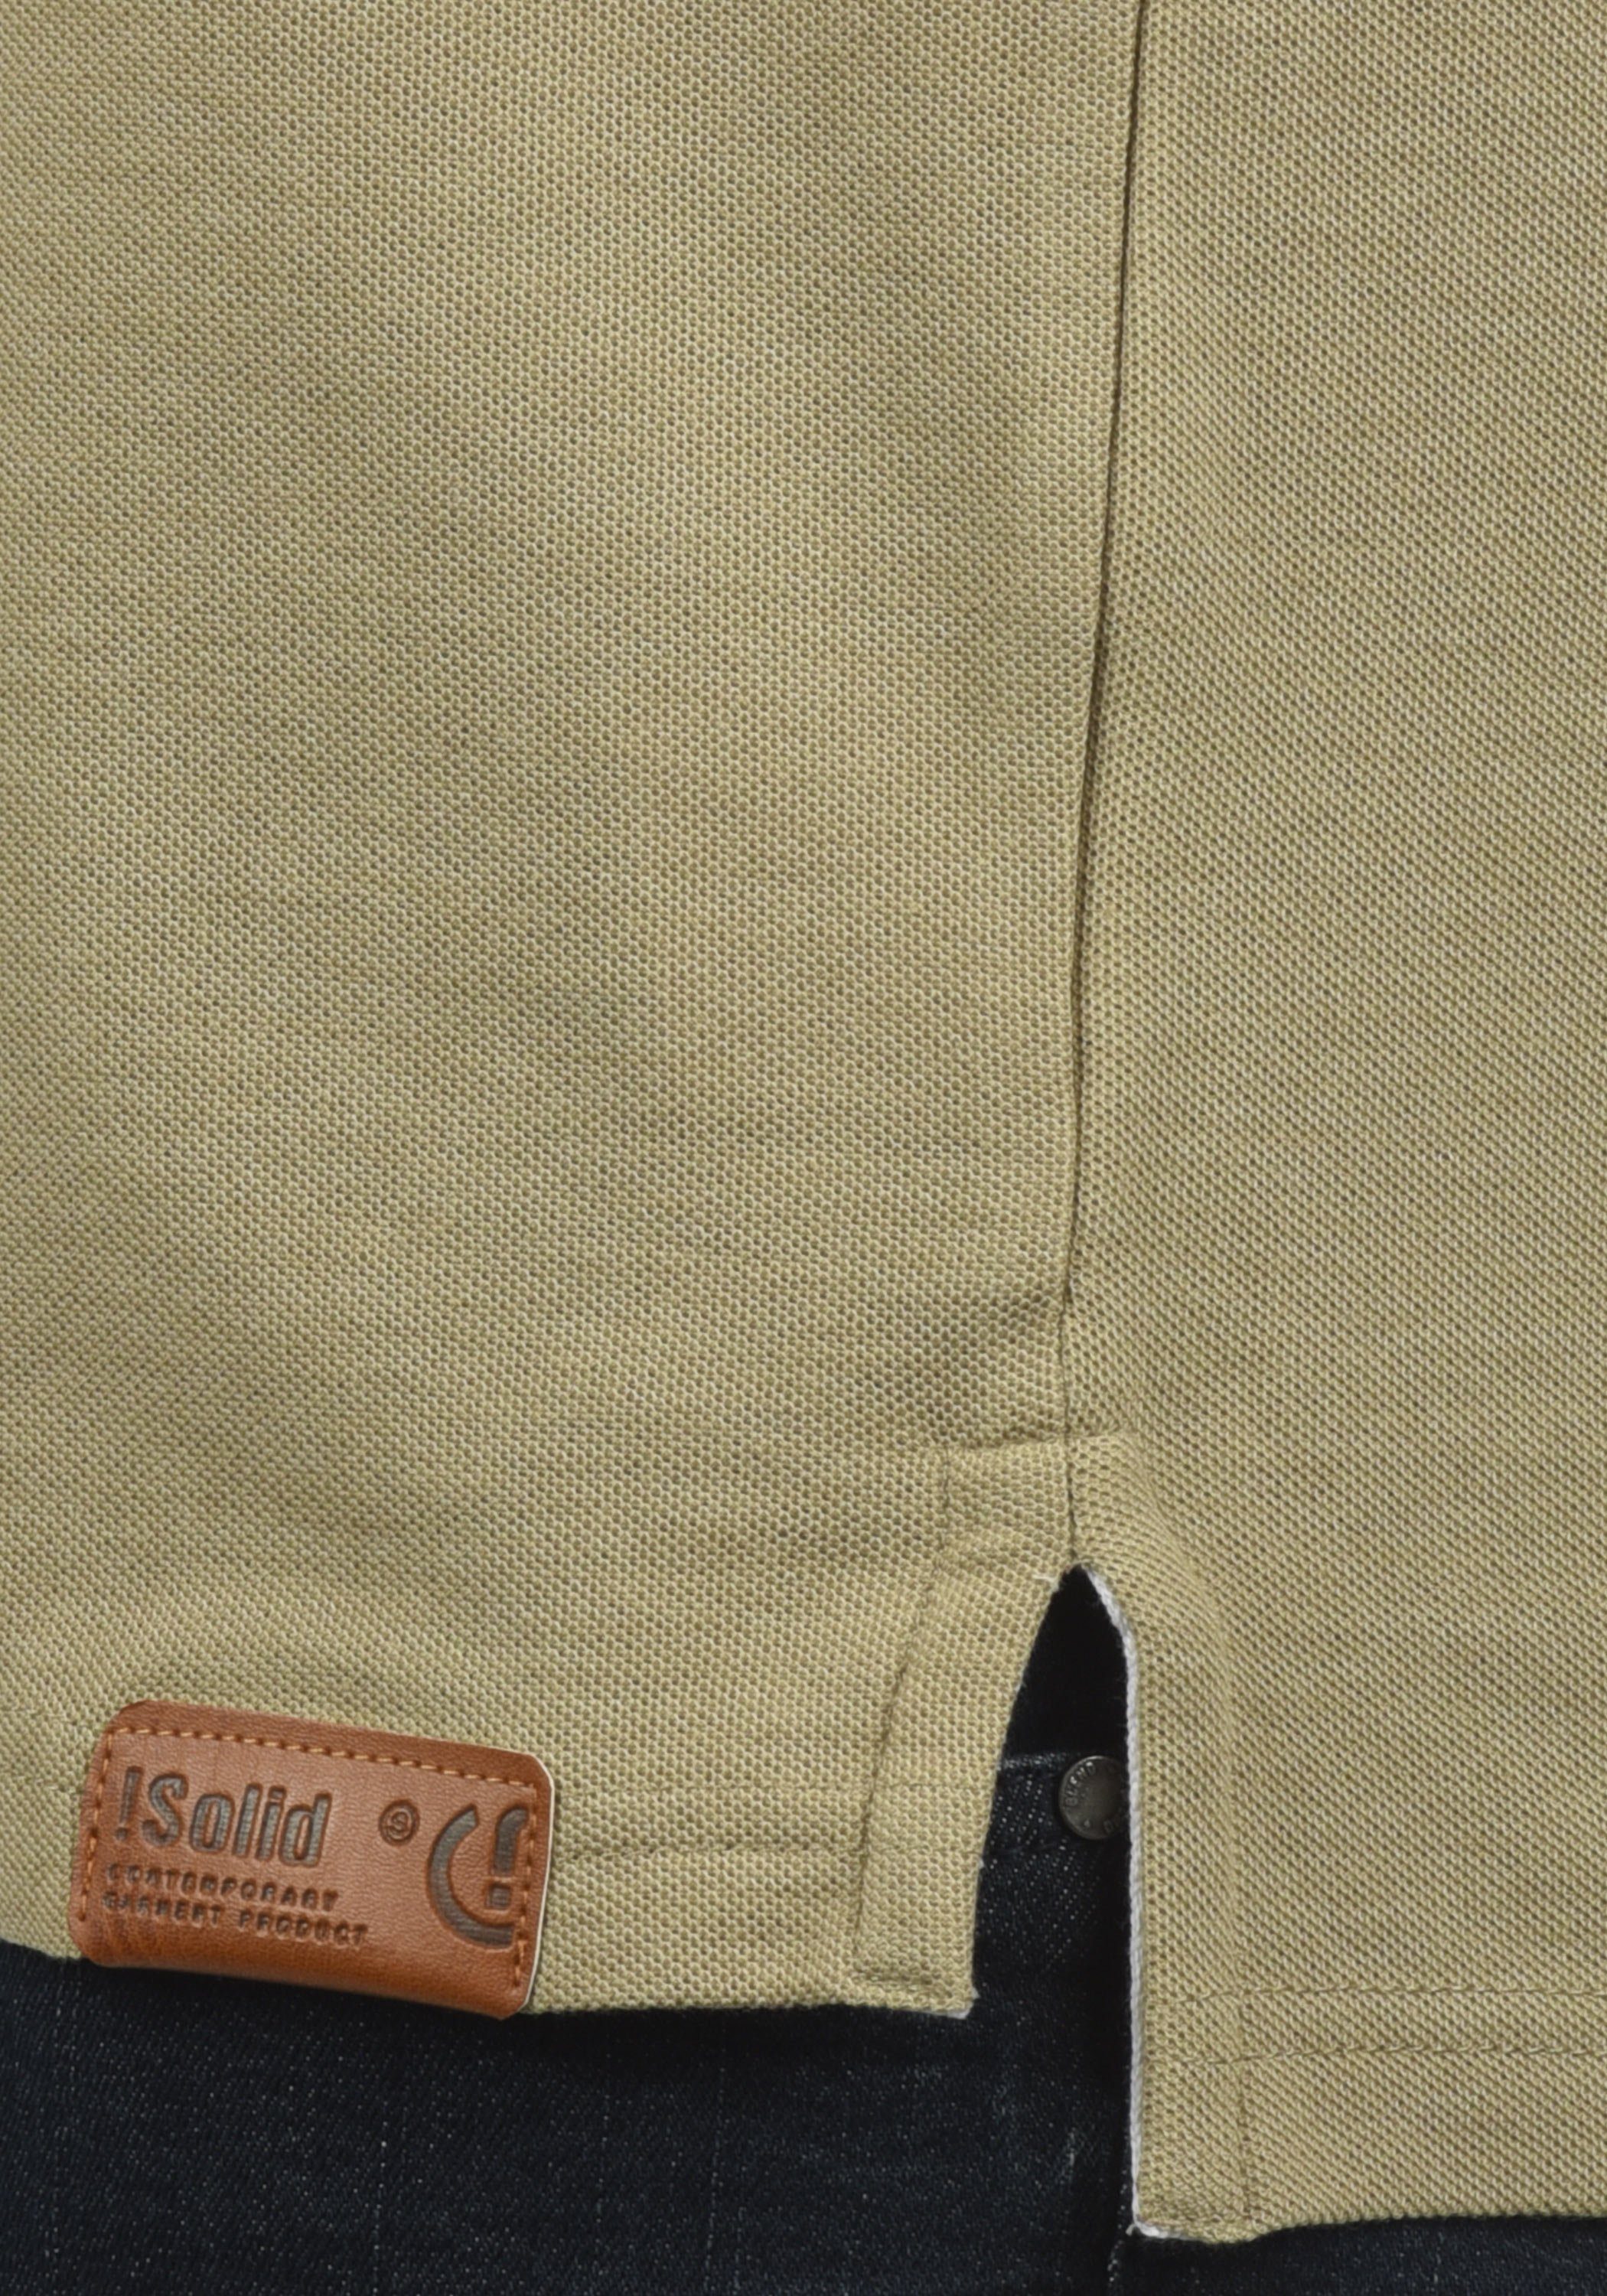 Herren Poloshirts  Solid Poloshirt SDTripPolo Polo mit verlängerter Rückenpartie